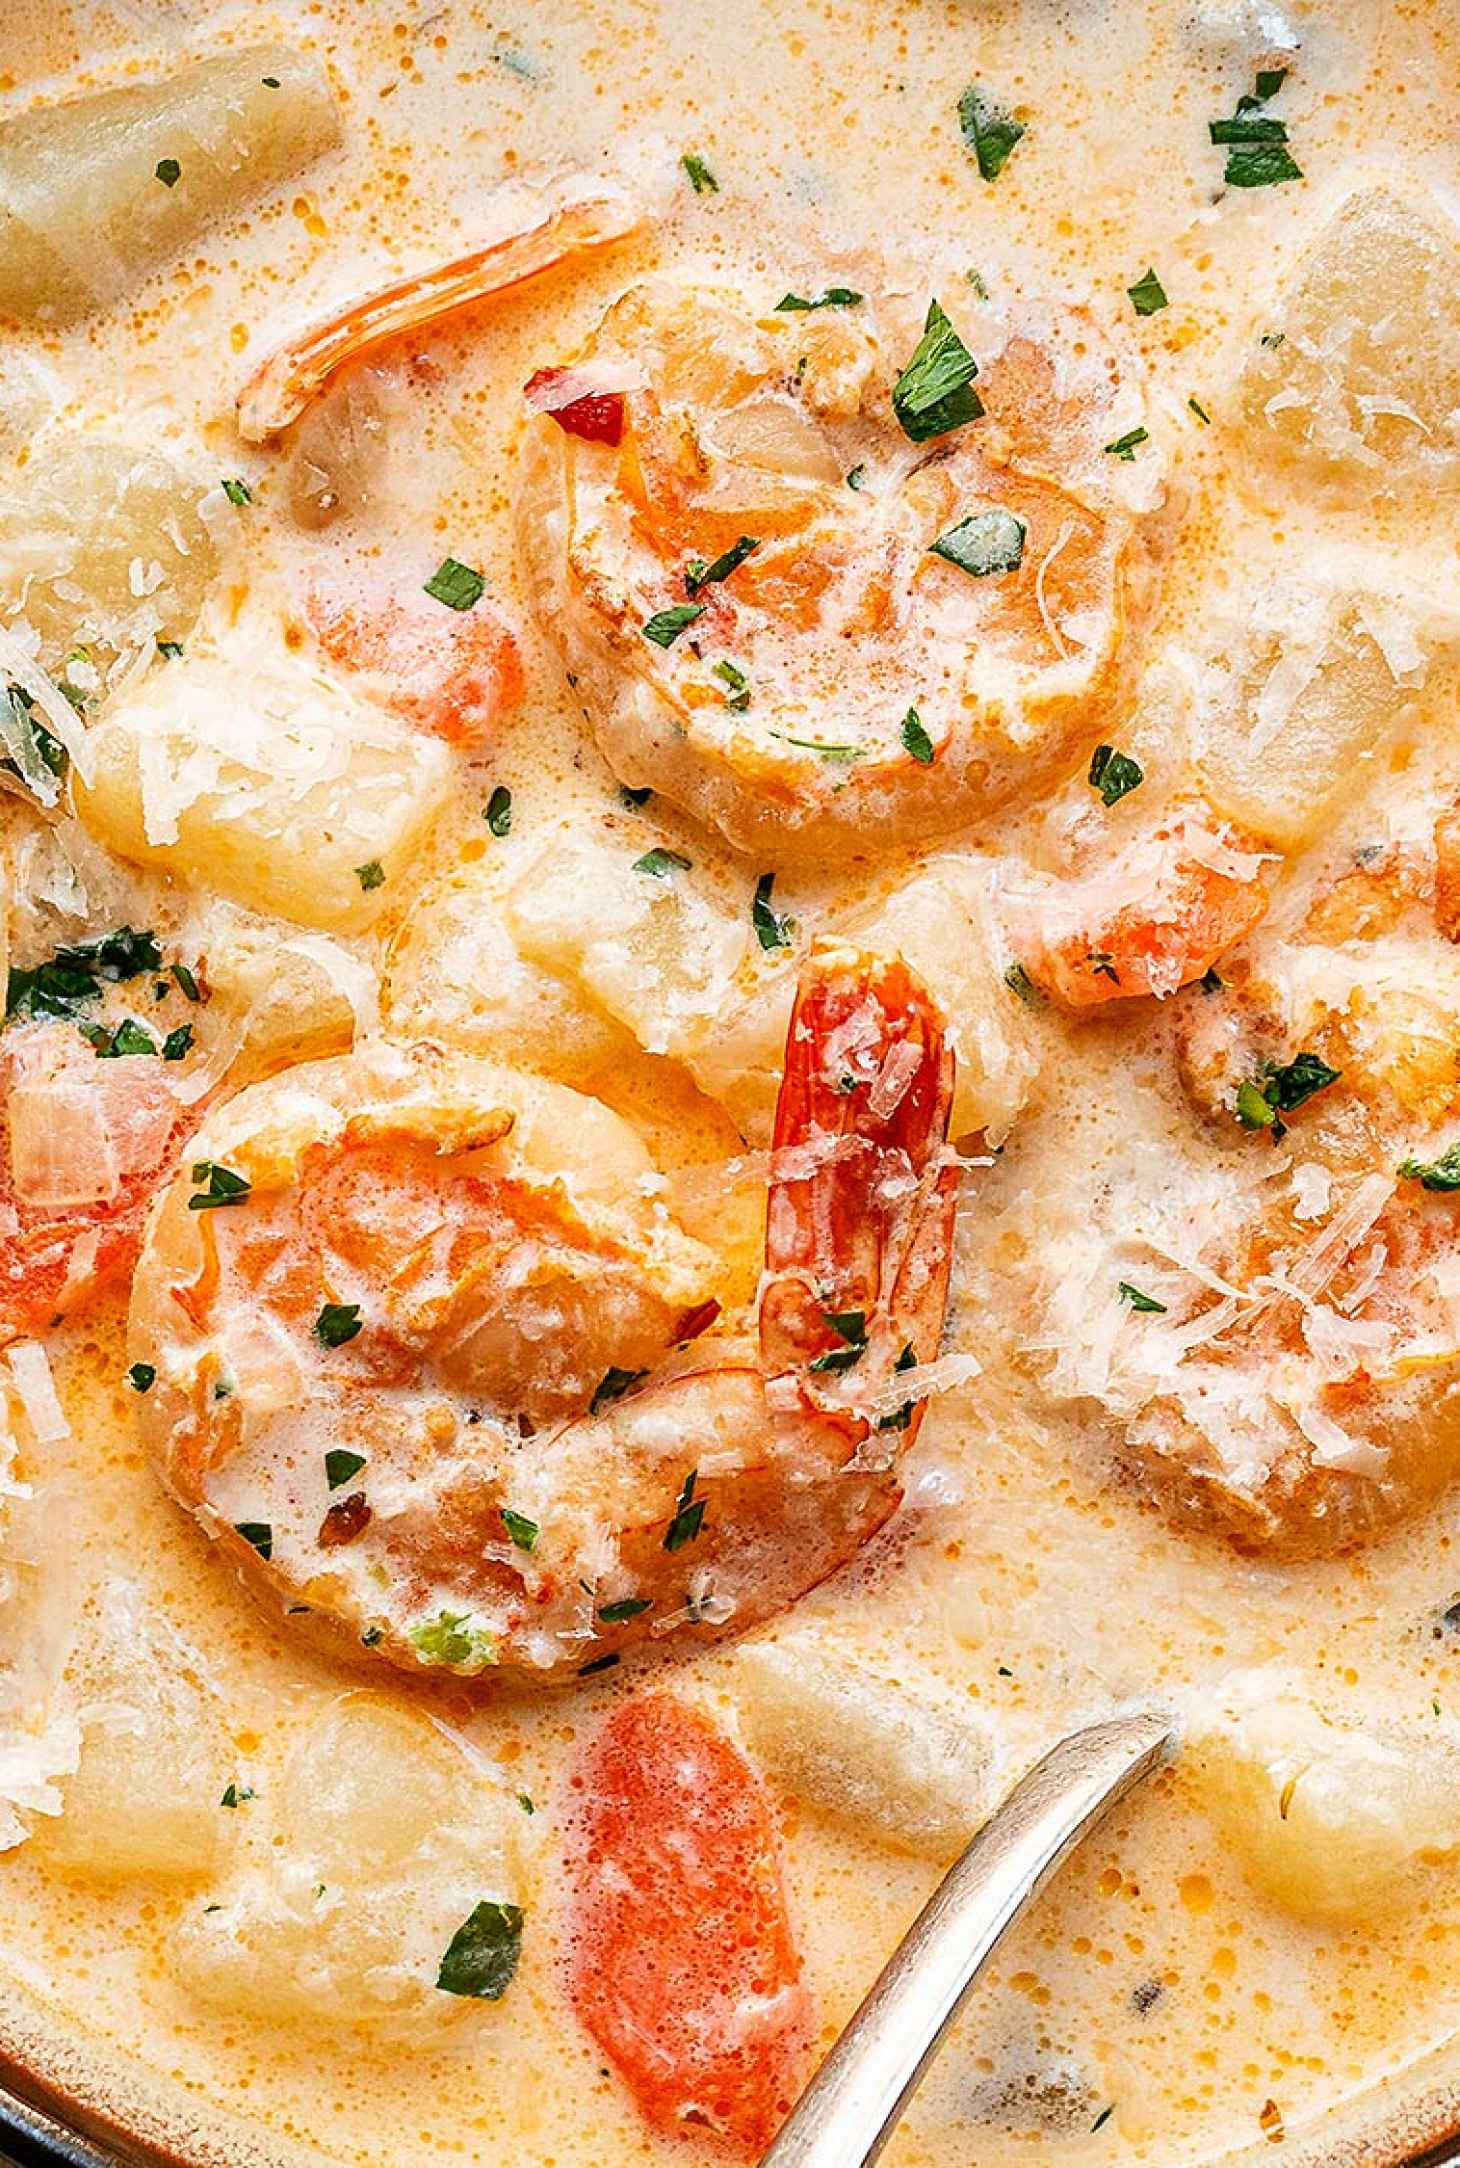 Instant Pot Creamy Shrimp Soup - #recipe by #eatwell101 - https://www.eatwell101.com/instant-pot-potato-shrimp-soup-recipe